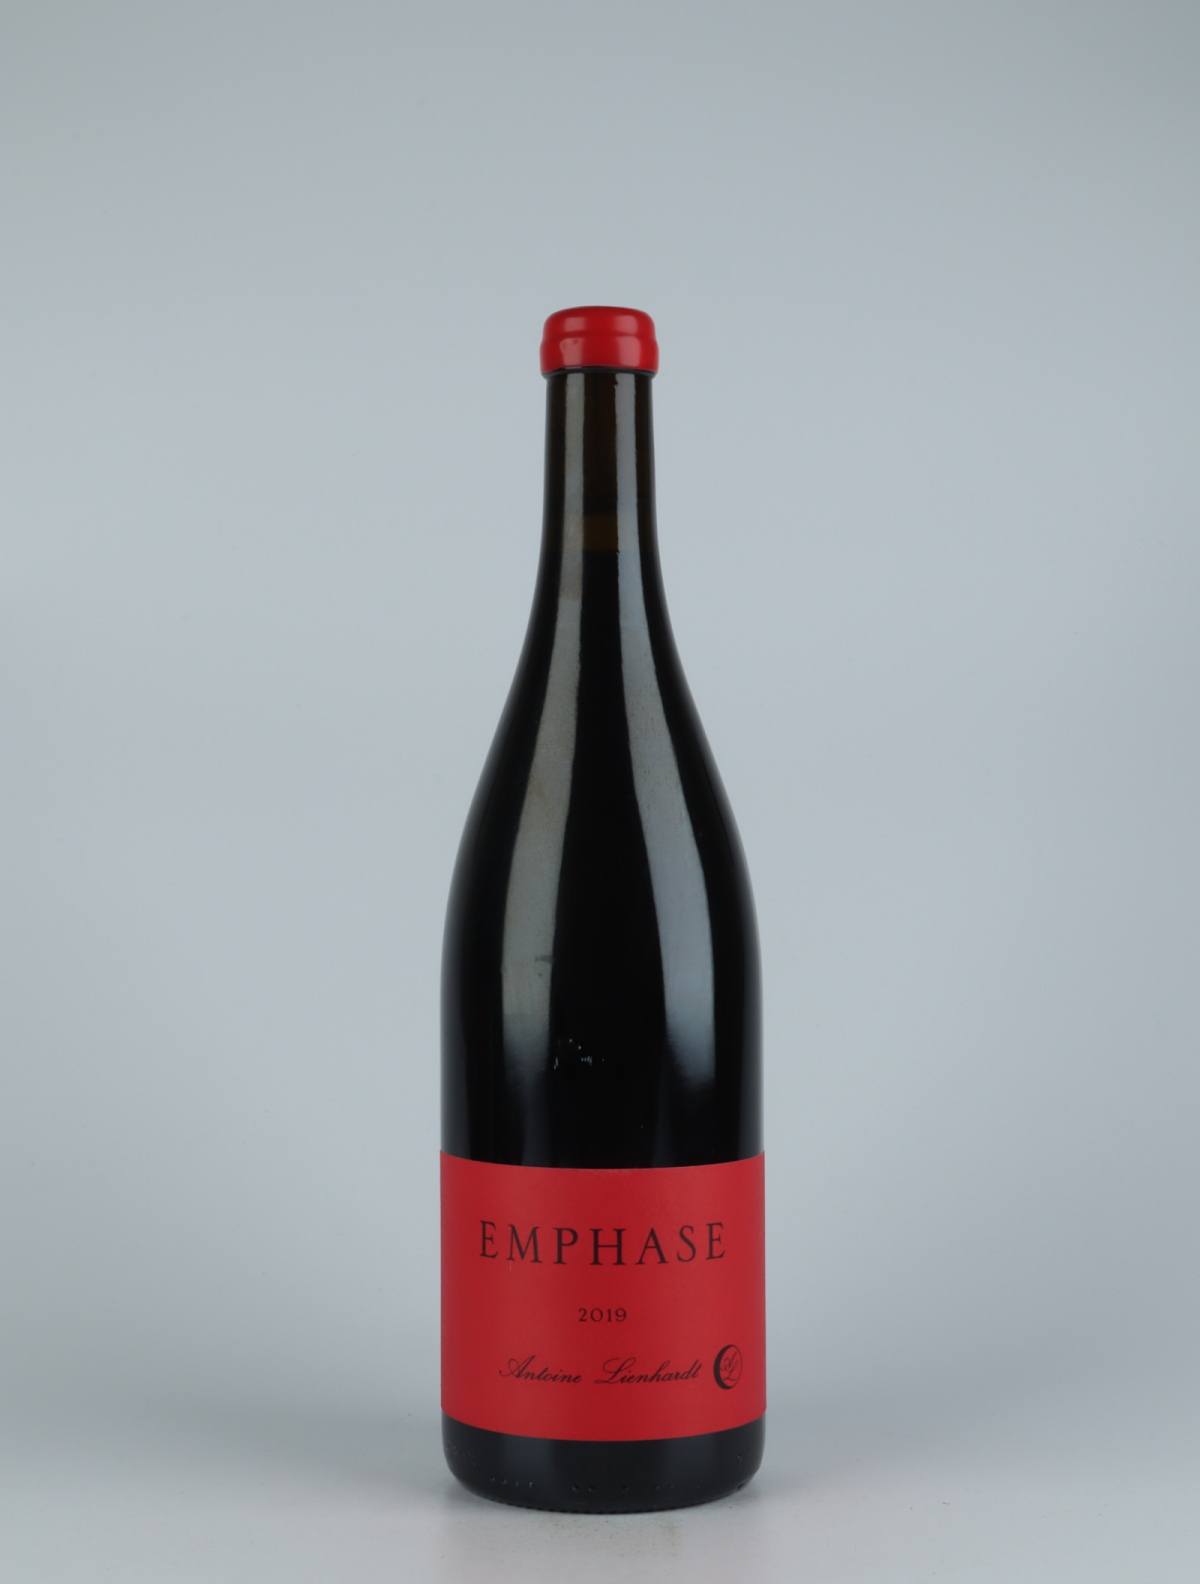 A bottle 2019 Côte de Nuits Villages - Emphase Red wine from Antoine Lienhardt, Burgundy in France